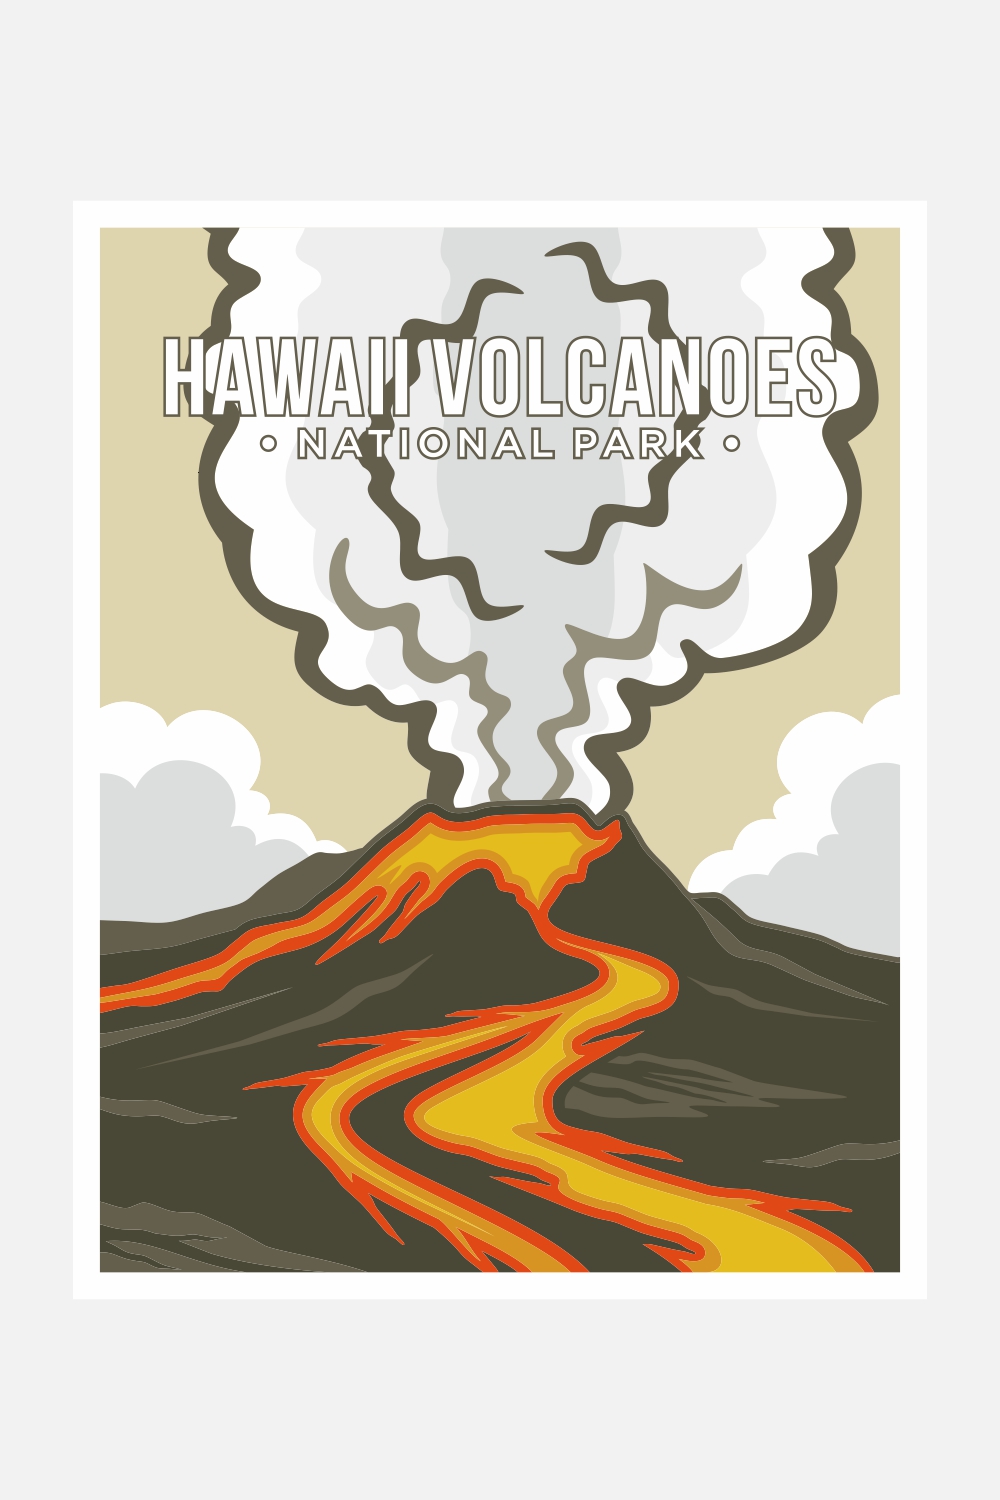 Hawaii Volcano National Park poster vector illustration design – Only $8 pinterest preview image.